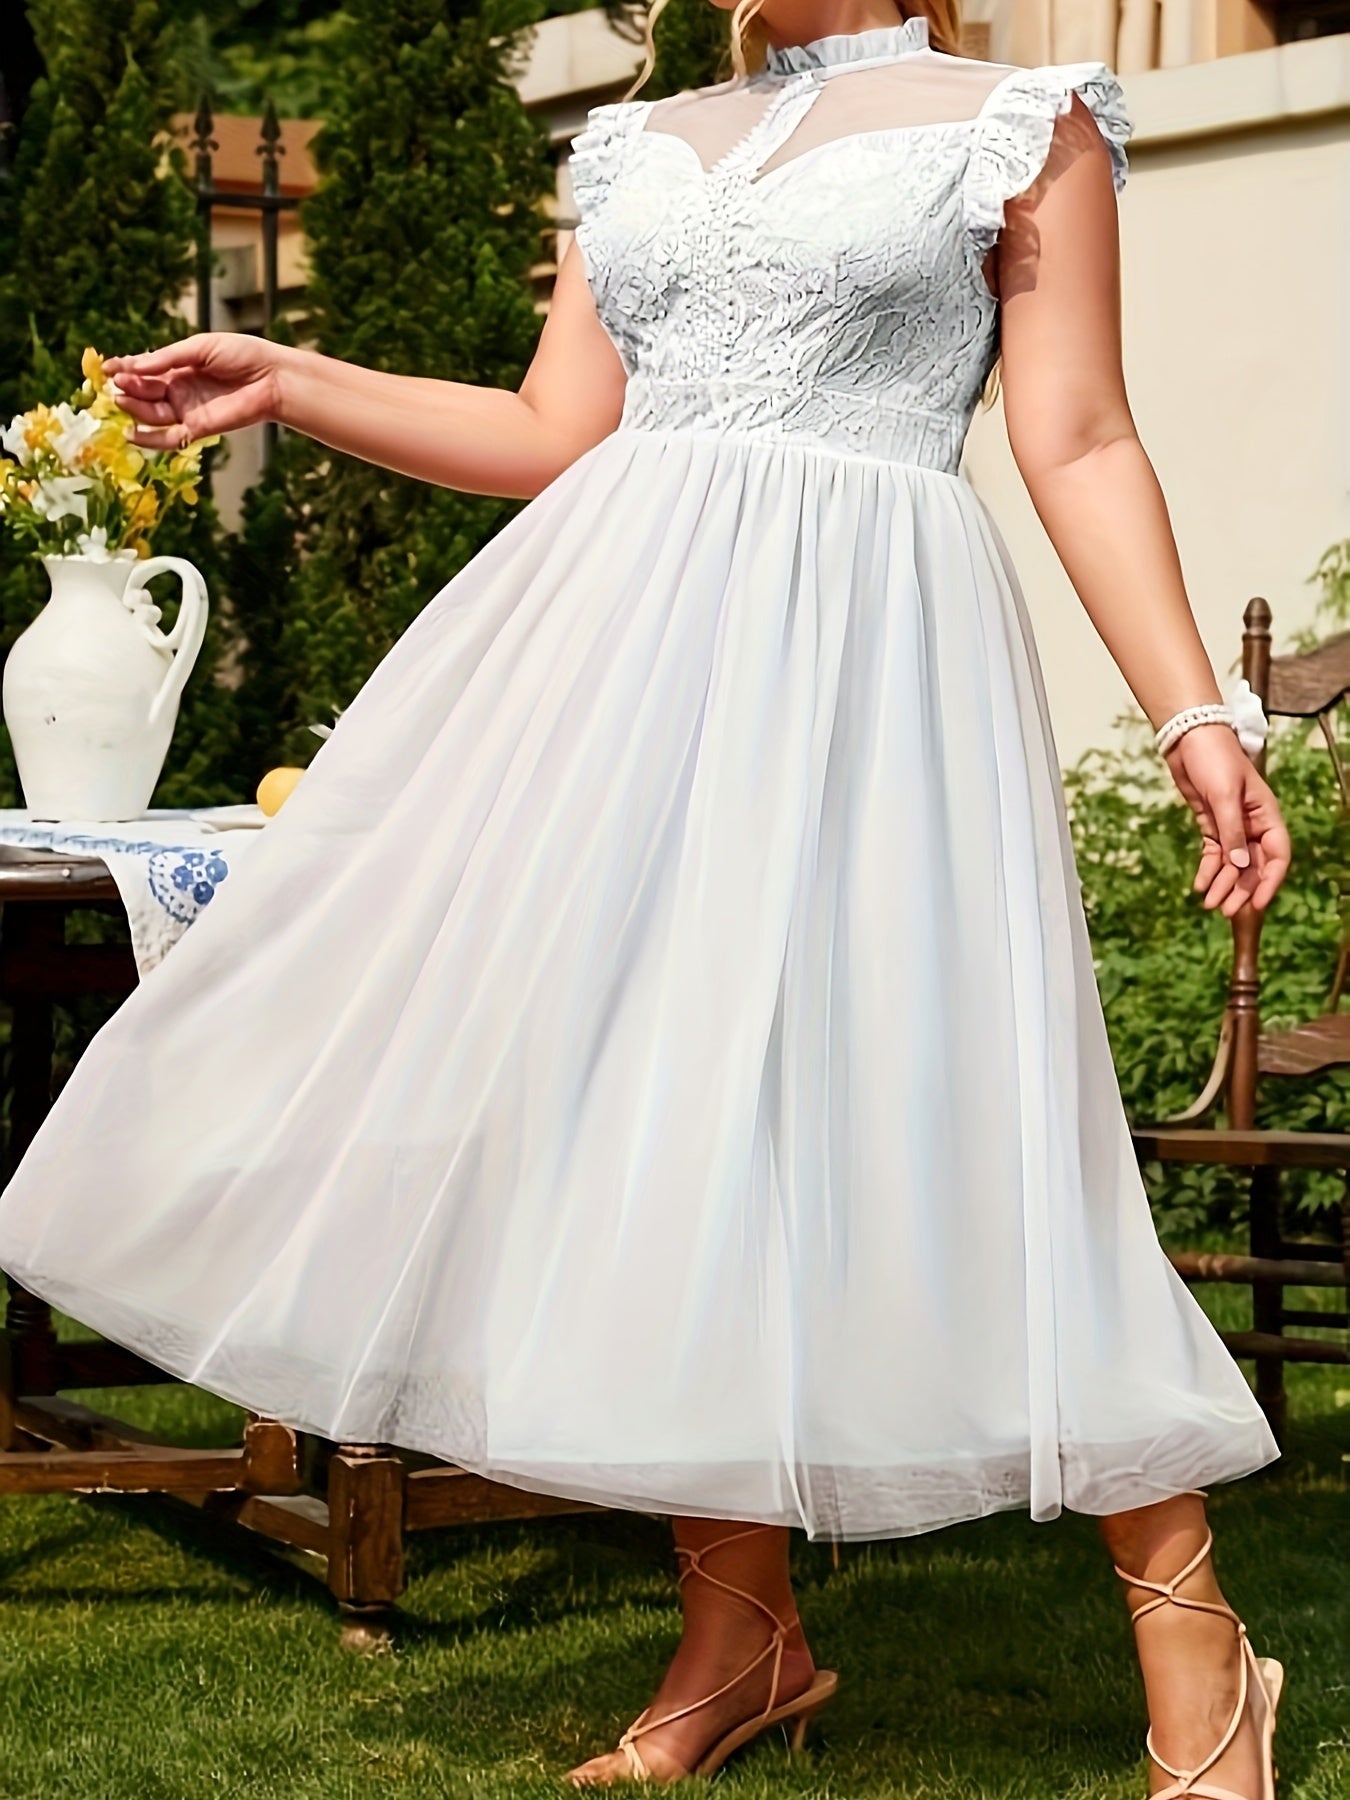 Antmvs Plus Size Elegant Bridesmaid Dress, Women's Plus Contrast Lace Ruffle Trim Mesh Overlay Formal Party Dress